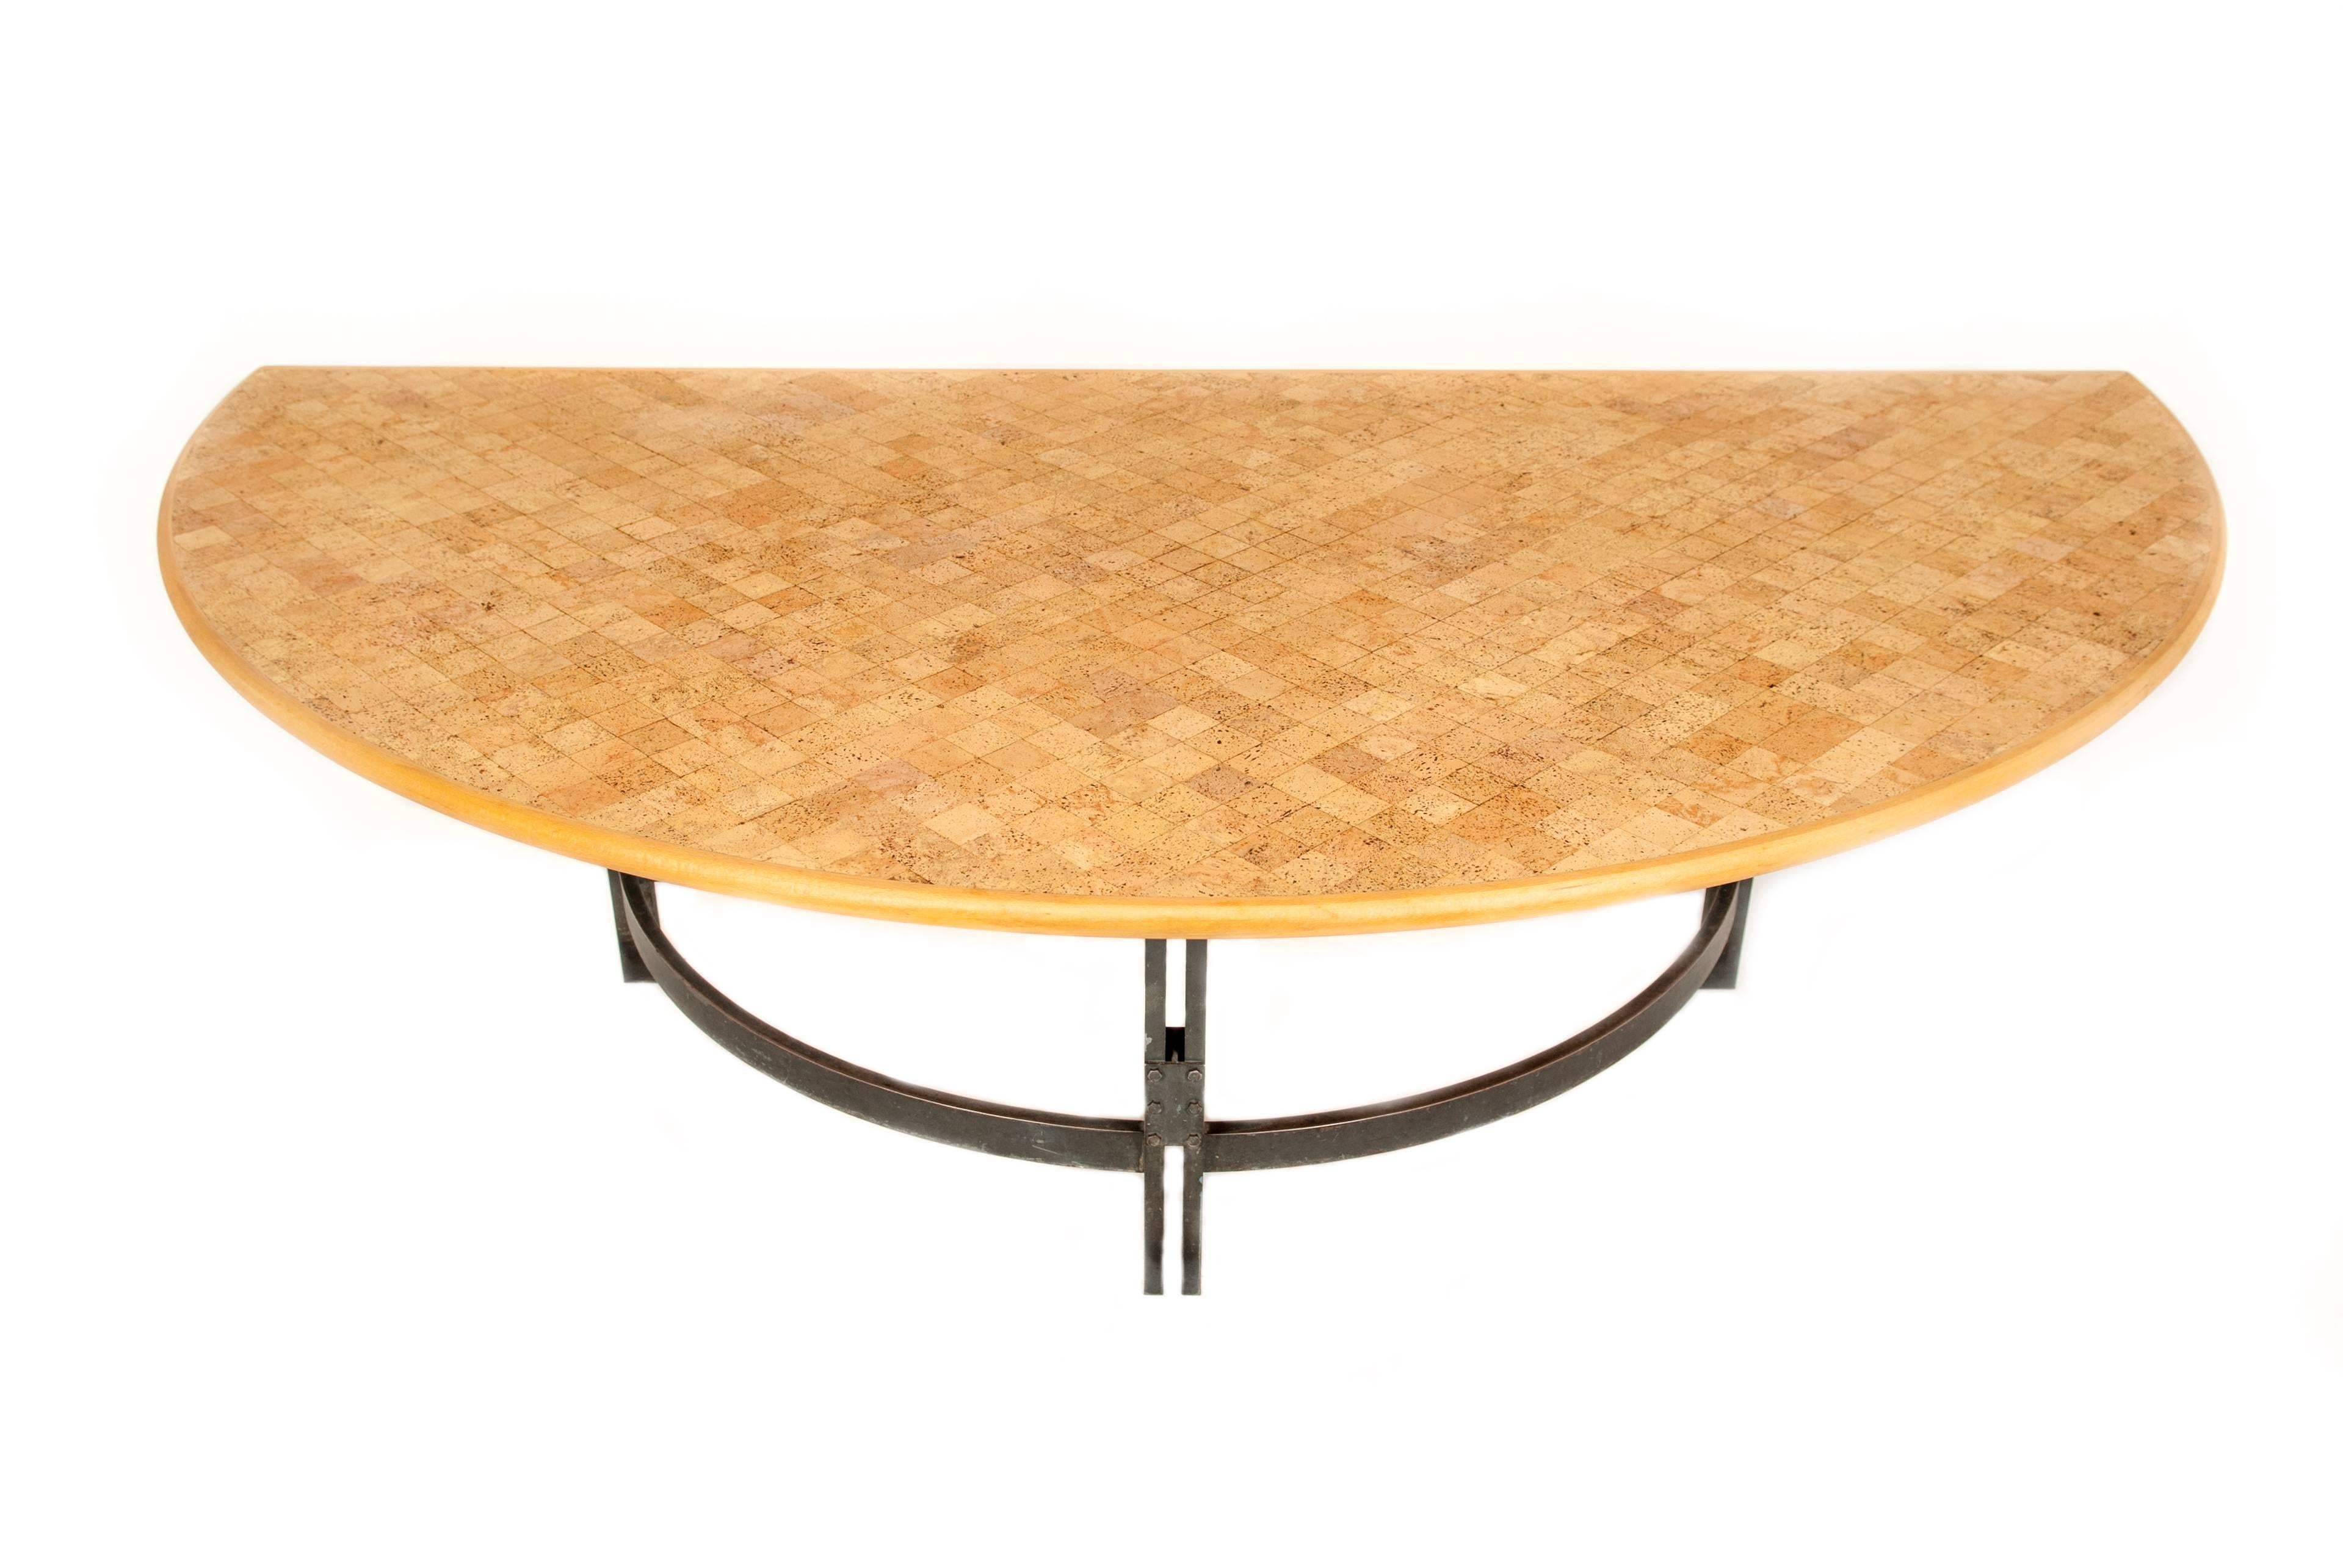 Poul Kjærholm Unique Semi-Circular Table In Excellent Condition In Copenhagen, DK